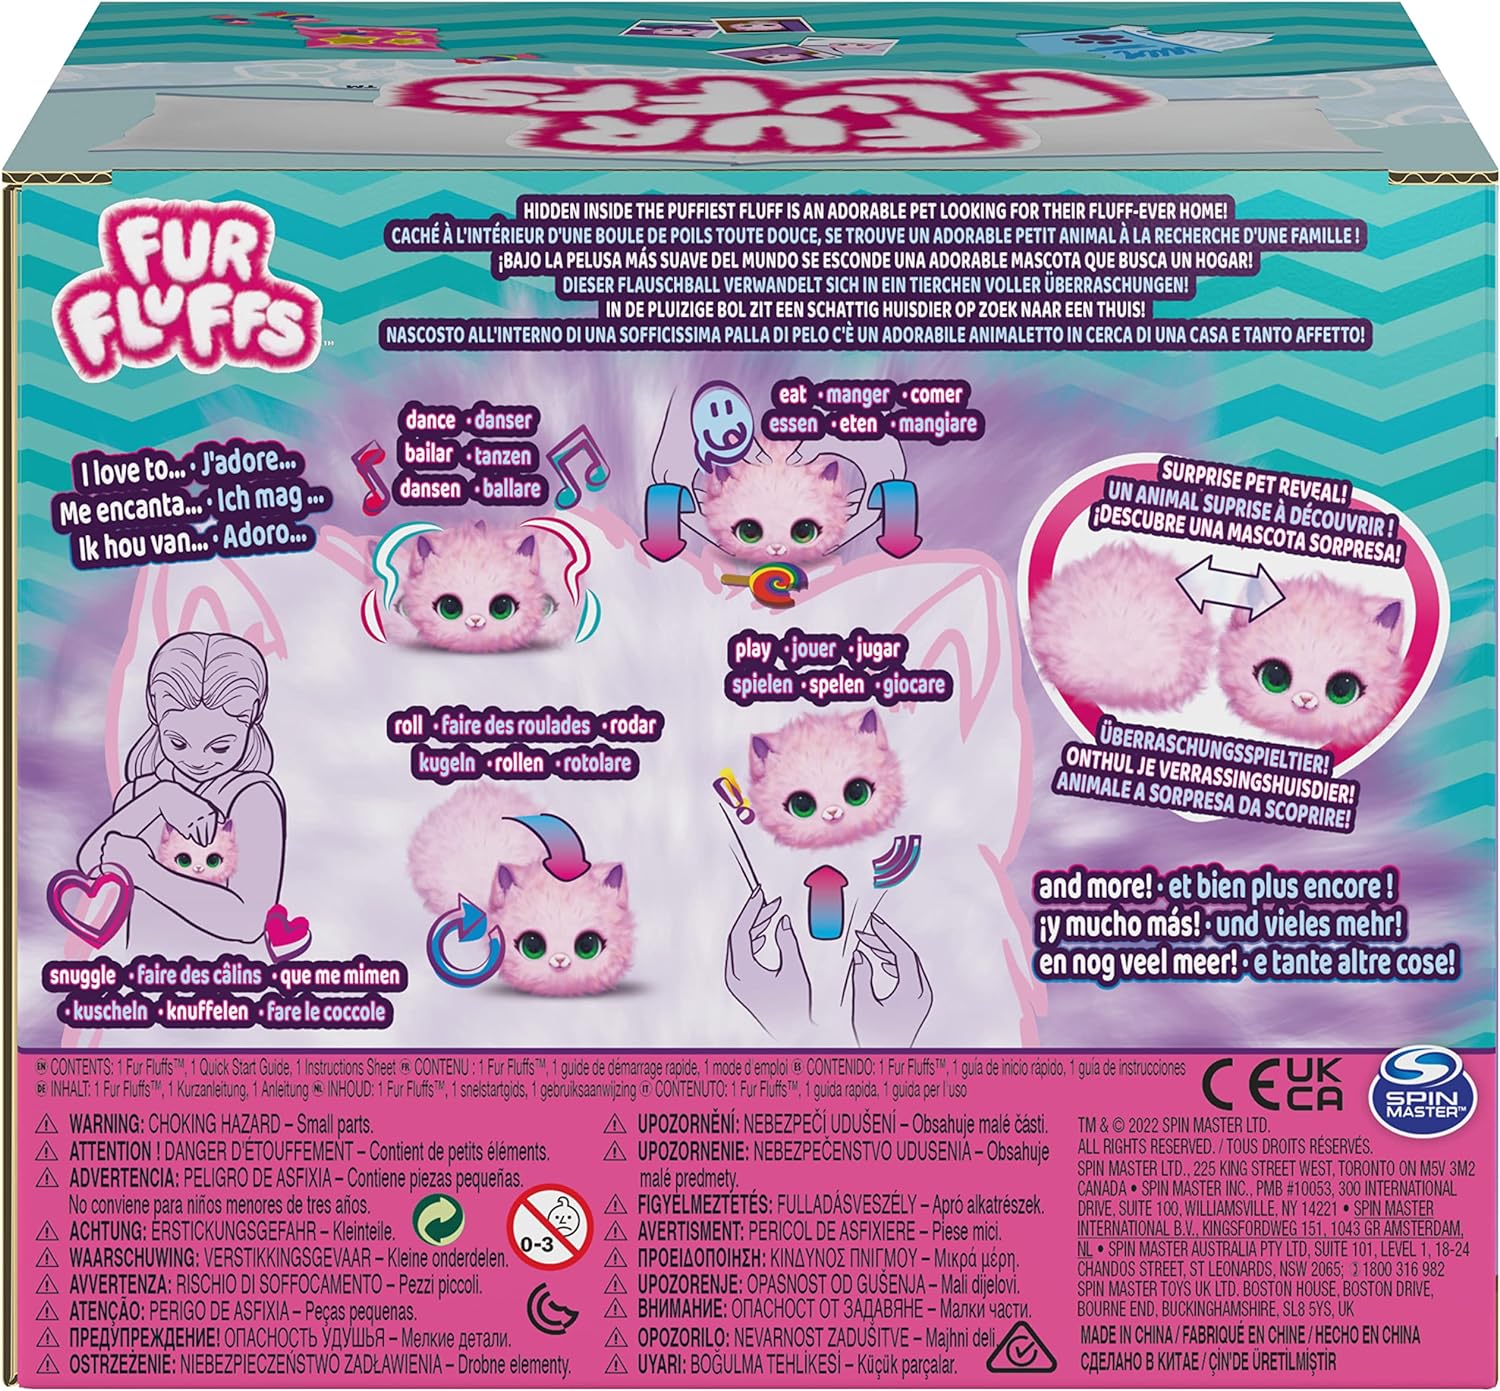 What the Fluff! Pur 'n Fluff - Pink Cat Fur Fluff